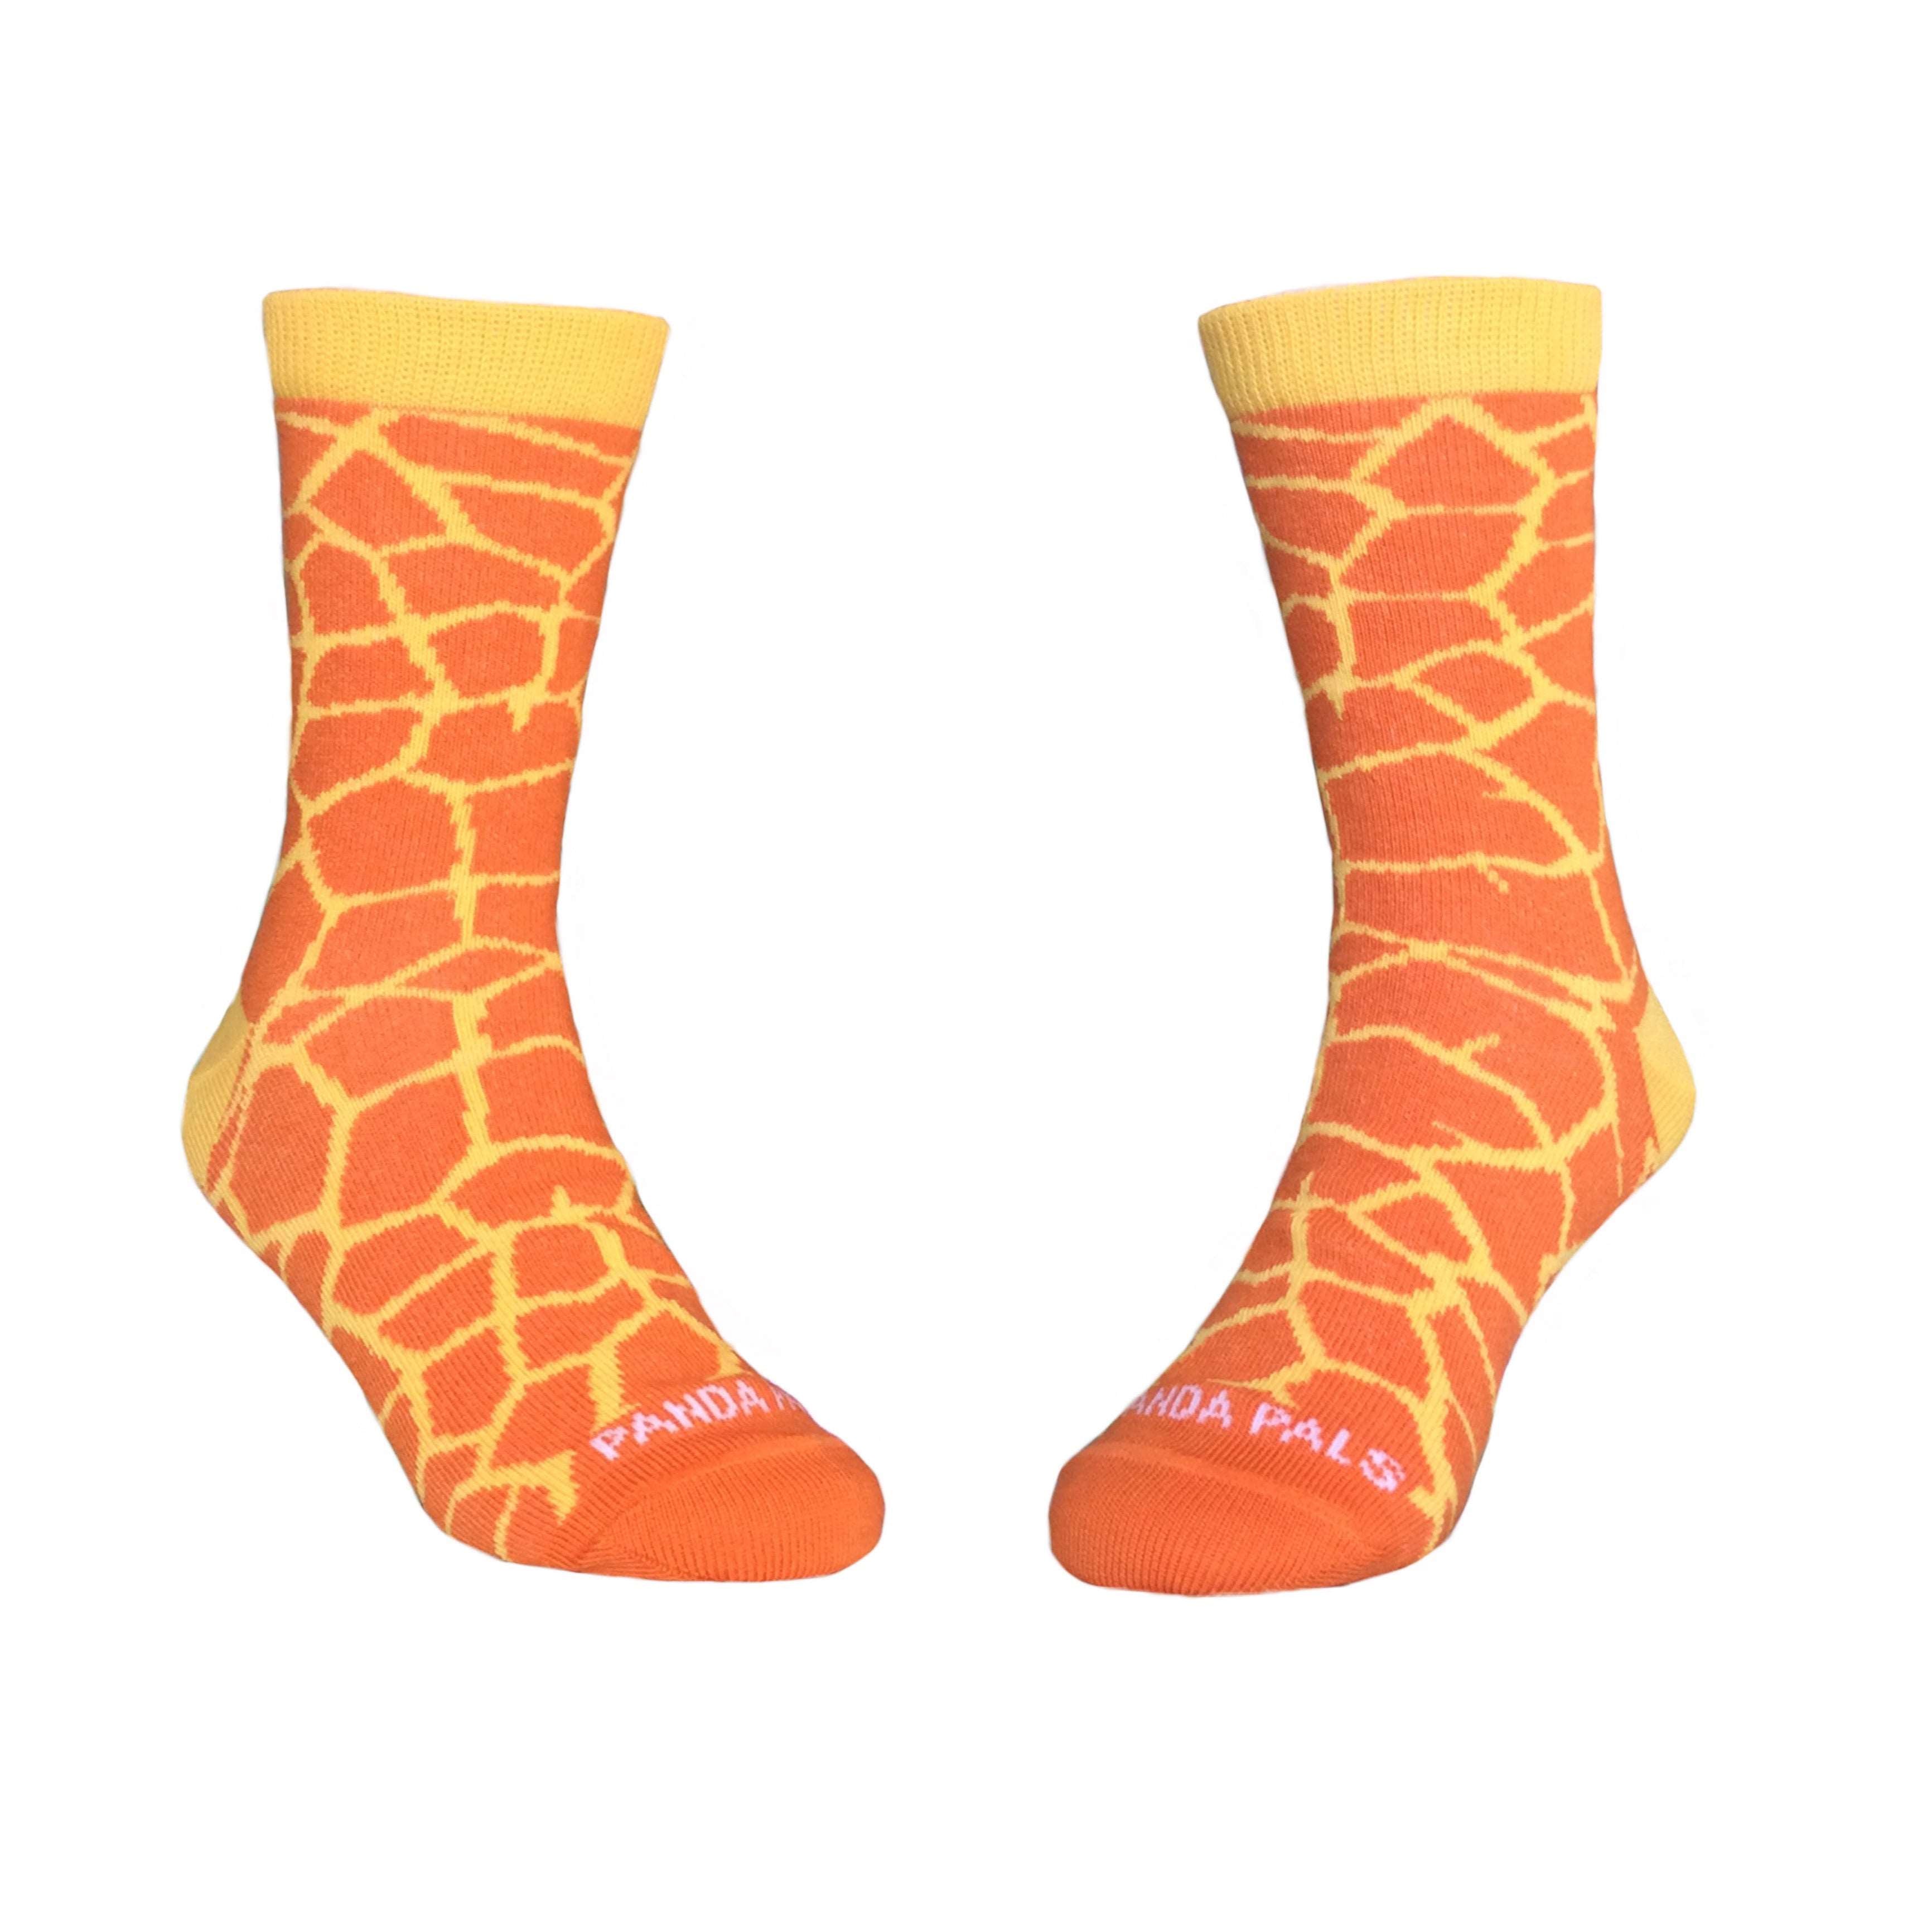 Giraffe Patterns Socks (Ages 3-7) from the Sock Panda